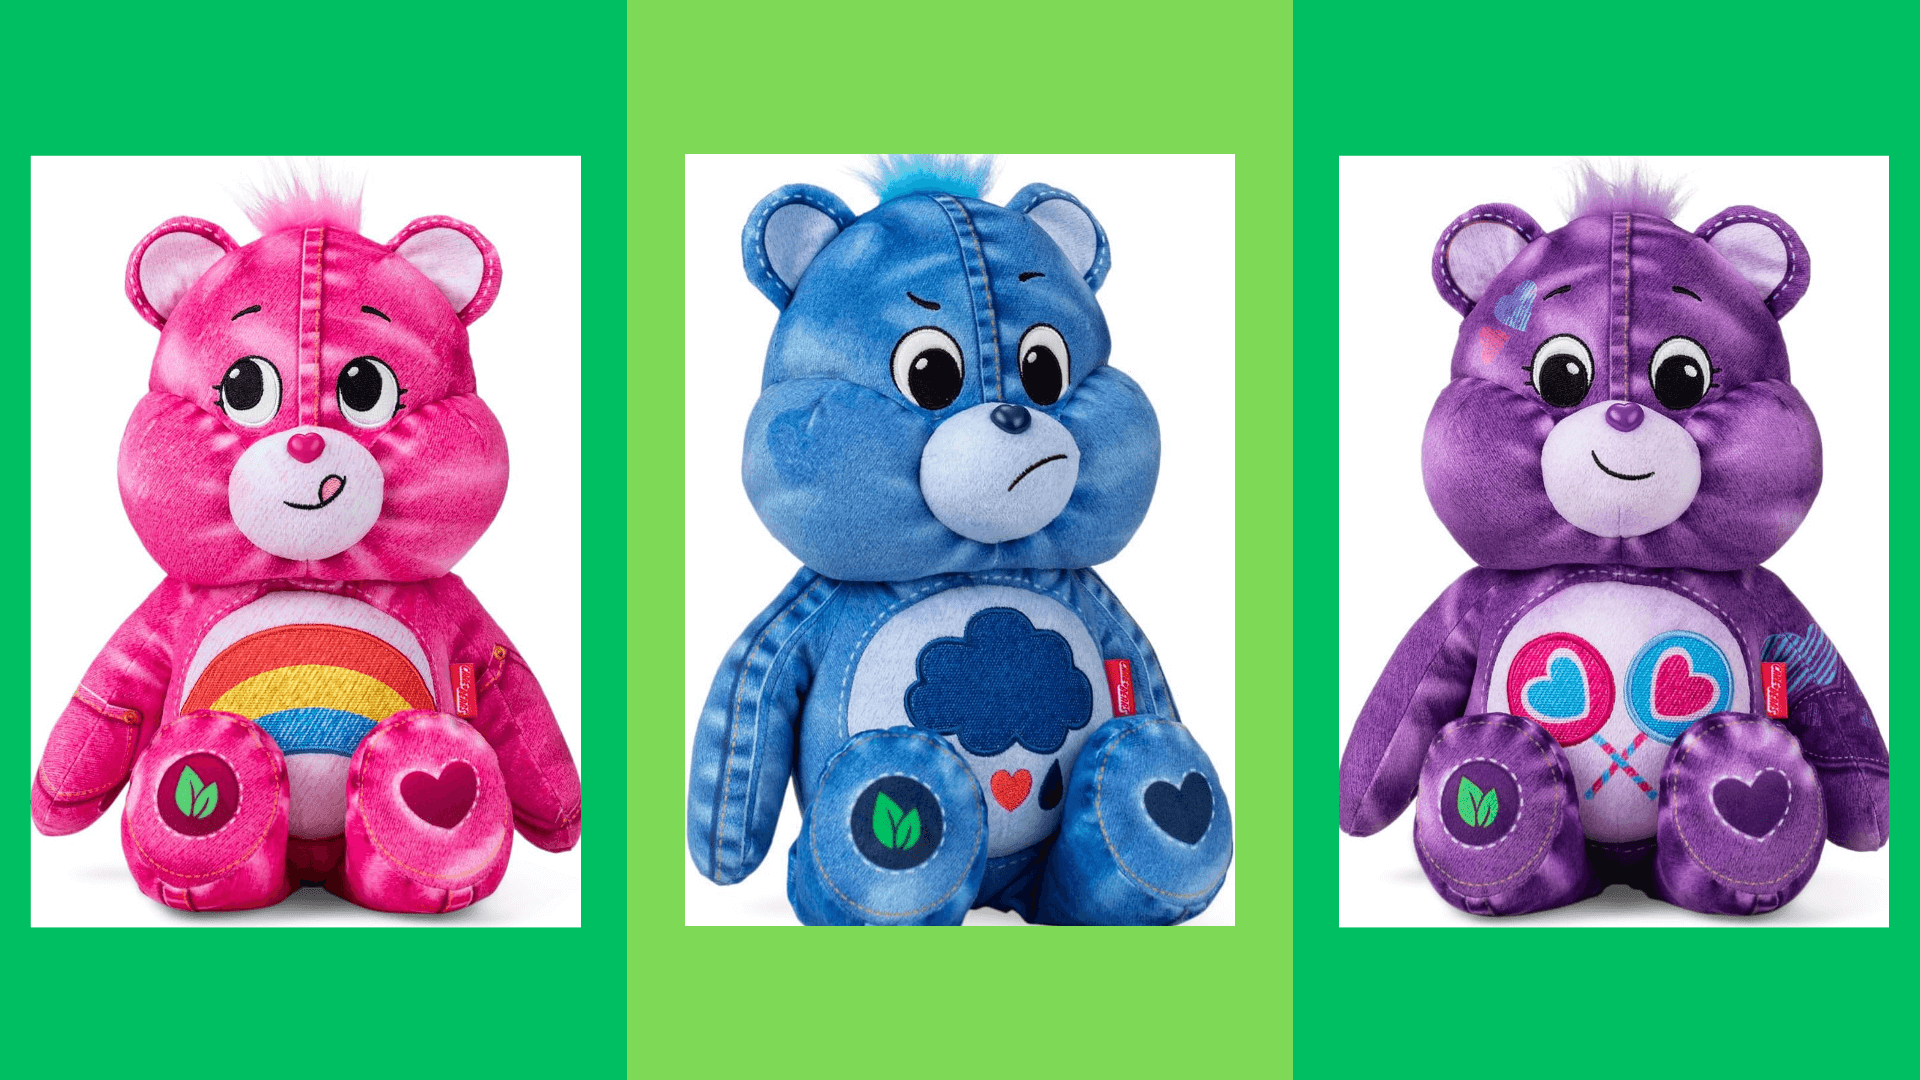 Trio of Care Bears on sale at Amazon (l. to r.) Pink Cheer Bear, Blue Grumpy Bear, Purple Share Bear